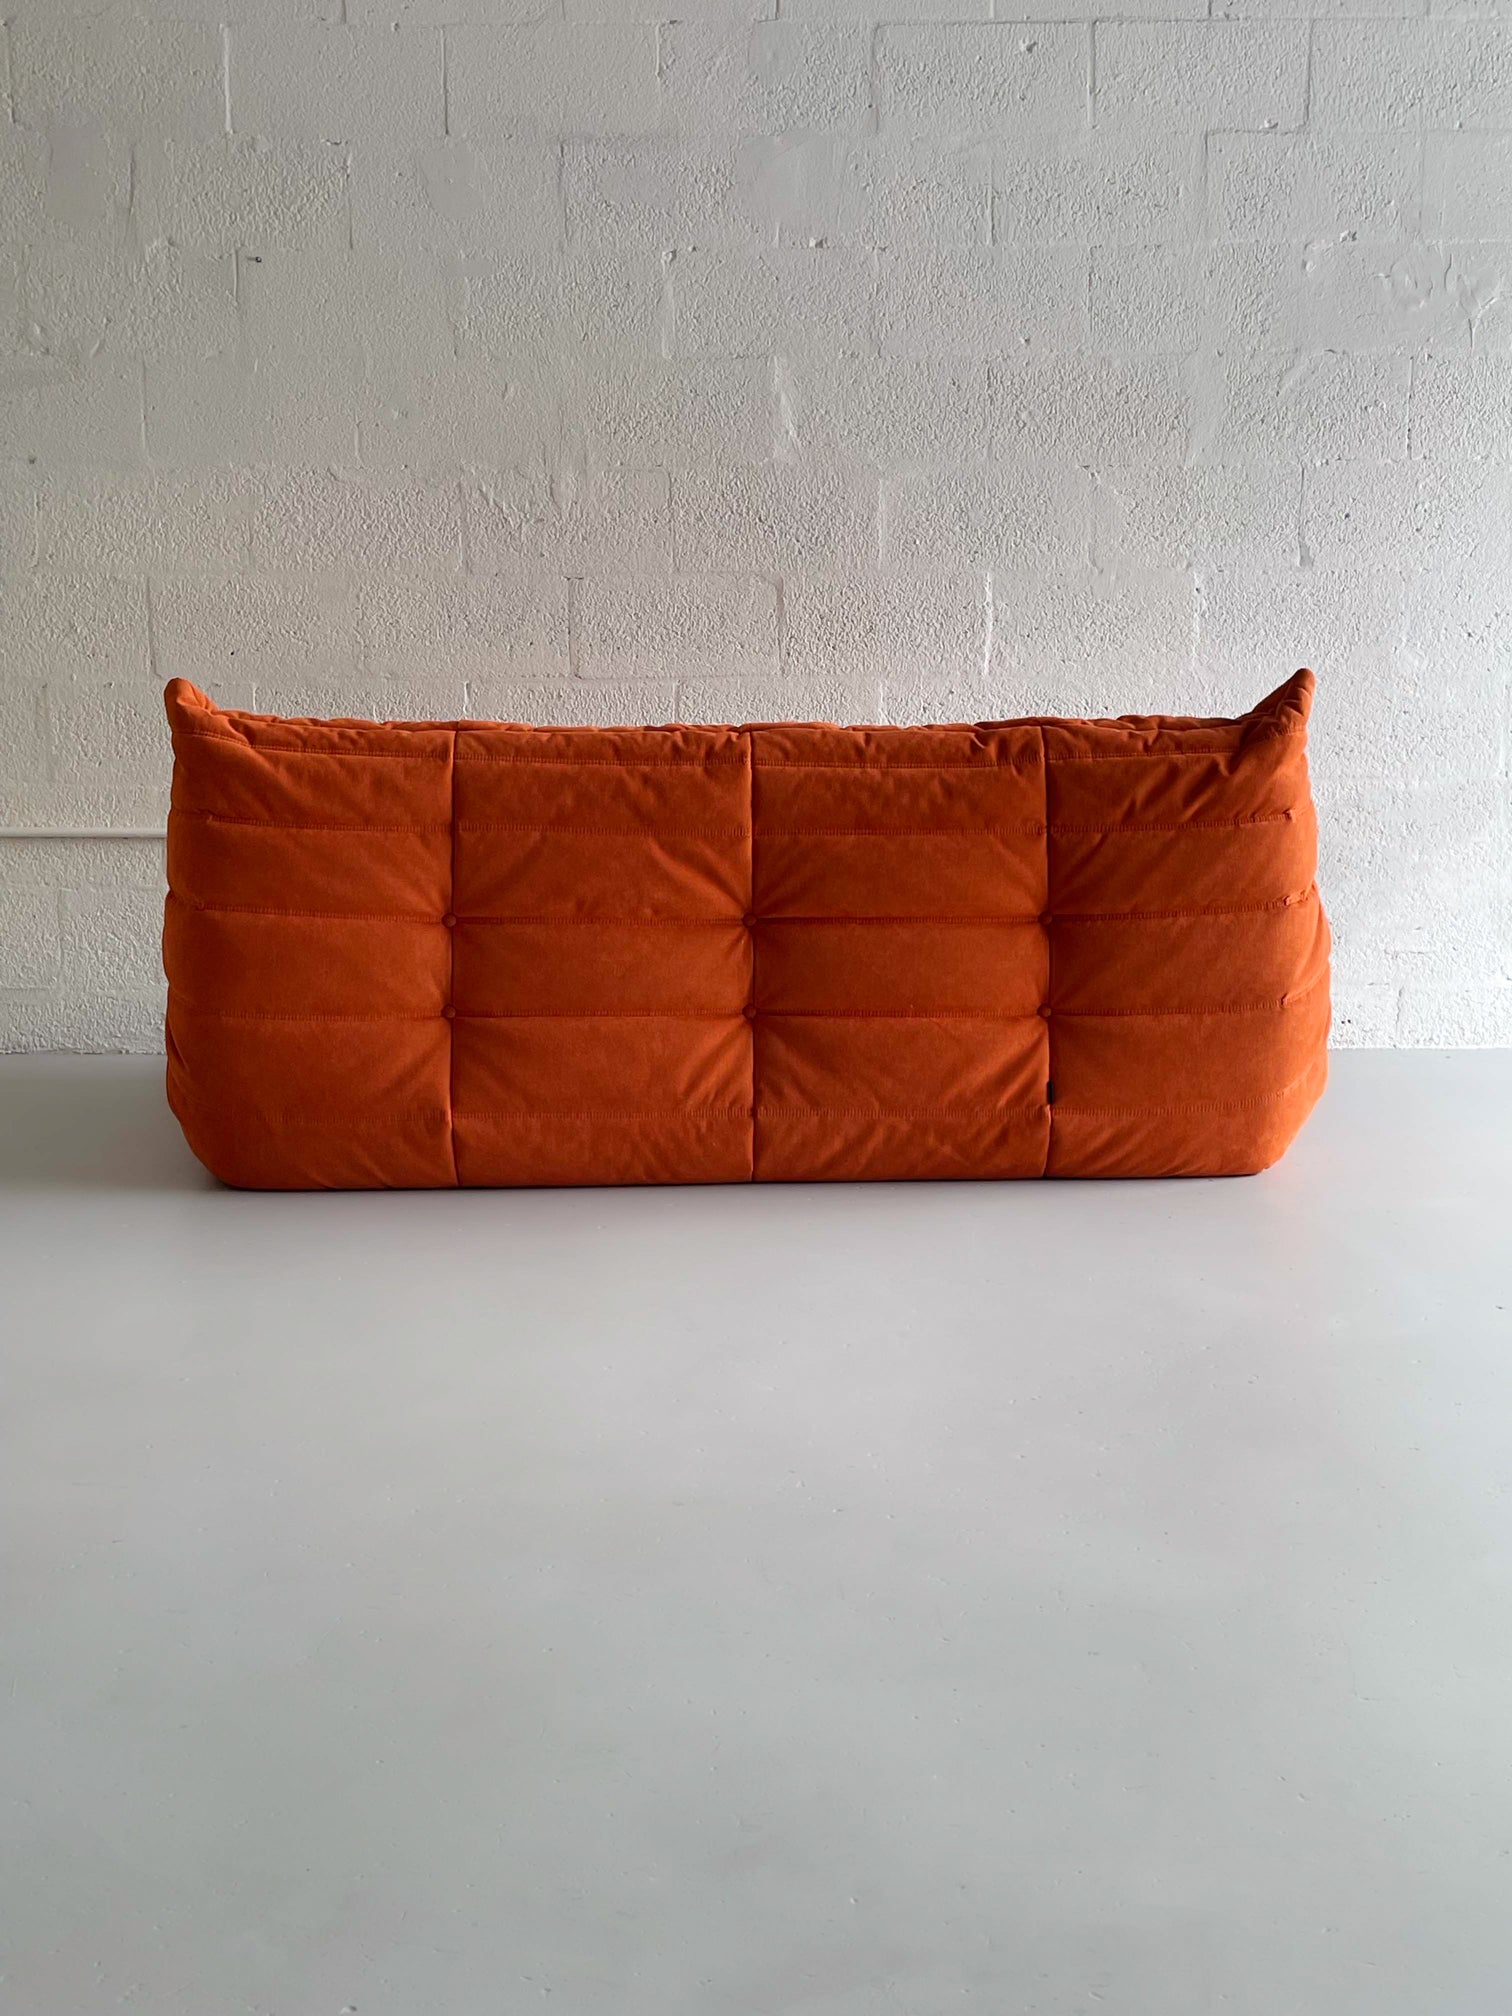 Orange Alcantara Togo Sofa by Michel Ducaroy for Ligne Roset